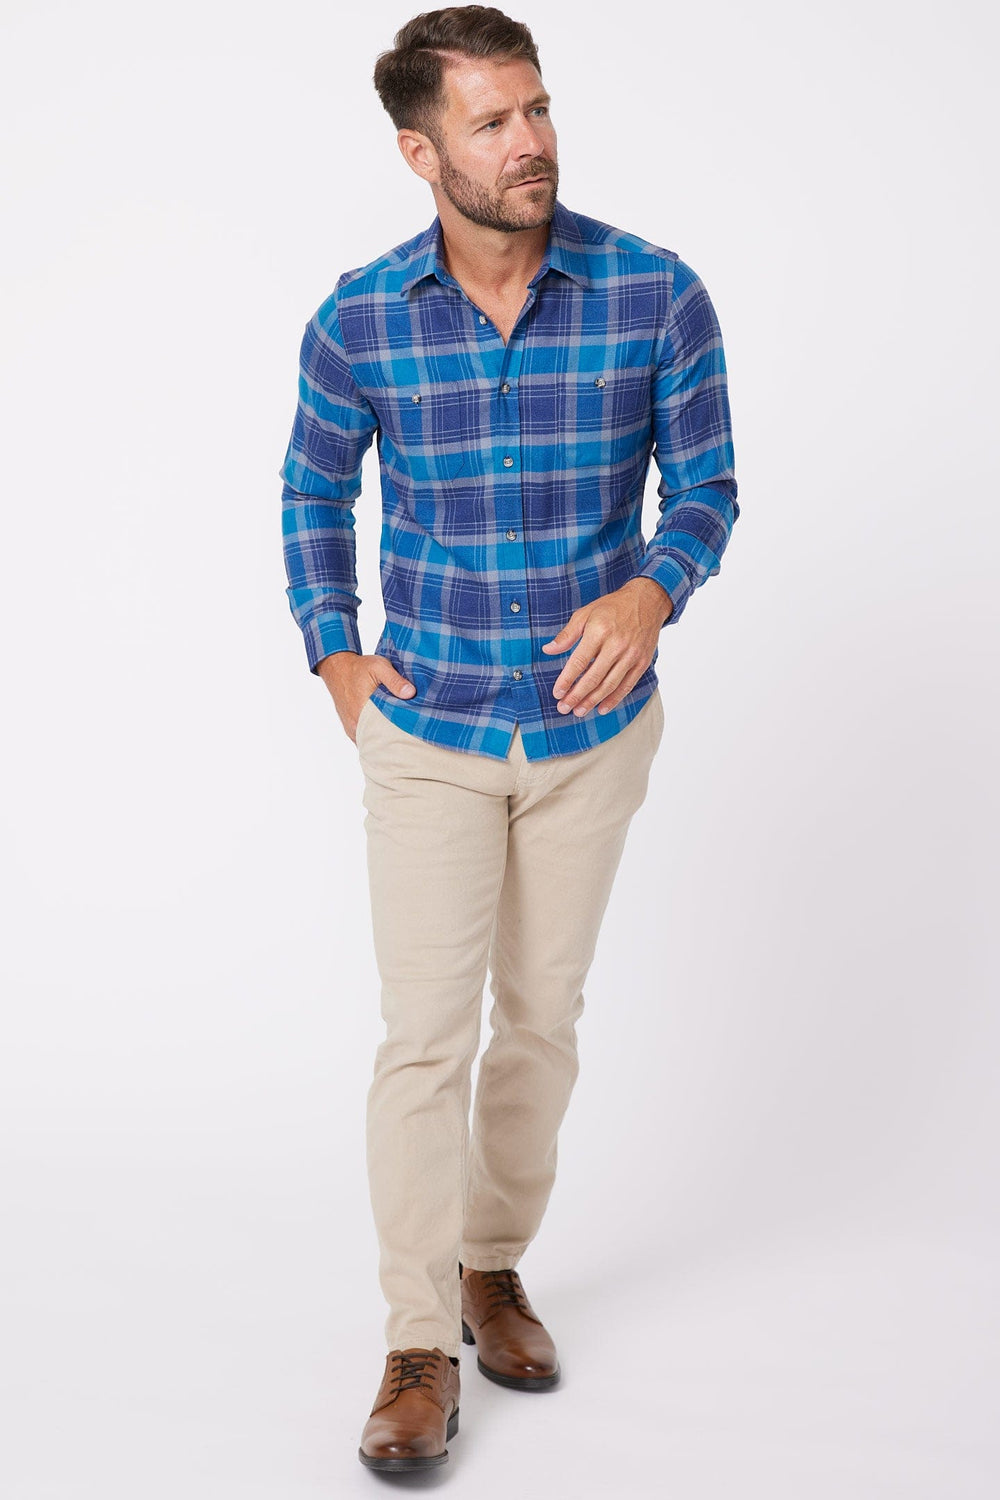 Buy Dawn Flannel Button-Down Shirt for Short Men | Ash & Erie   Flannel Everyday Shirt